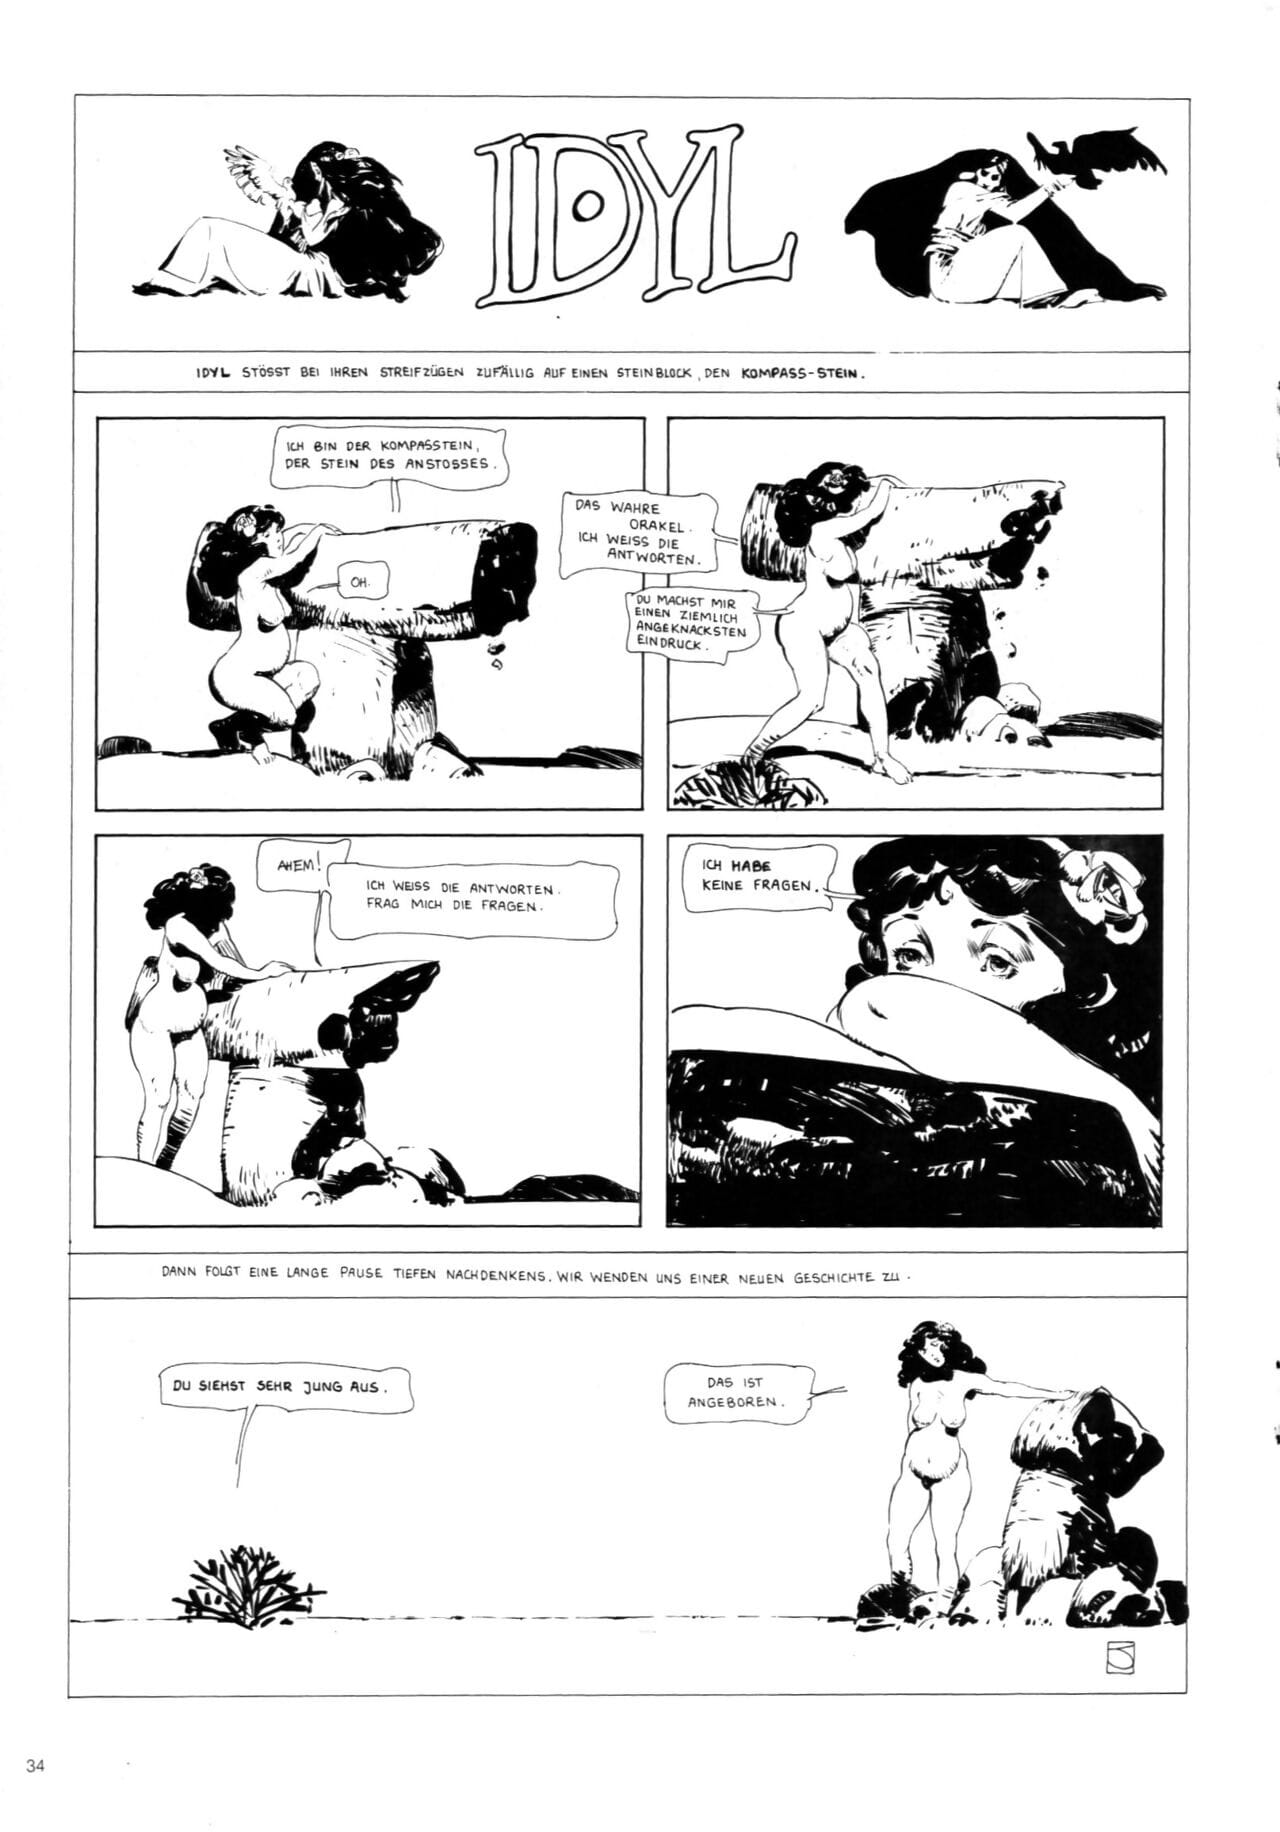 schwermetall #030 PART 2 page 1